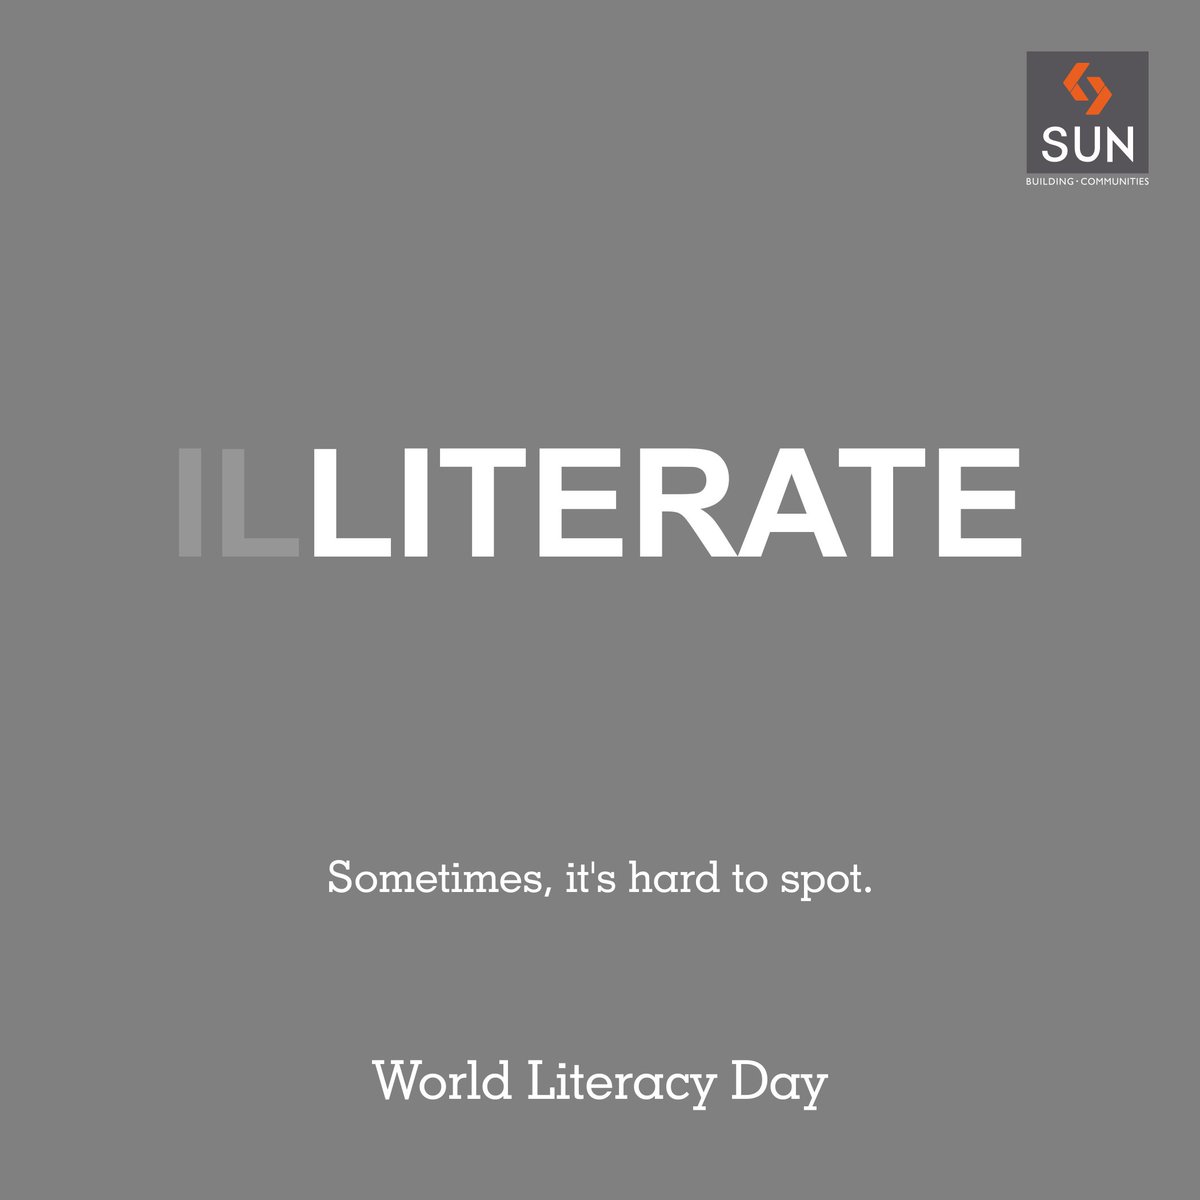 Together, let's pledge to eradicate illiteracy and impart education to children. #WorldLiteracyDay https://t.co/gKSSVDdWHr